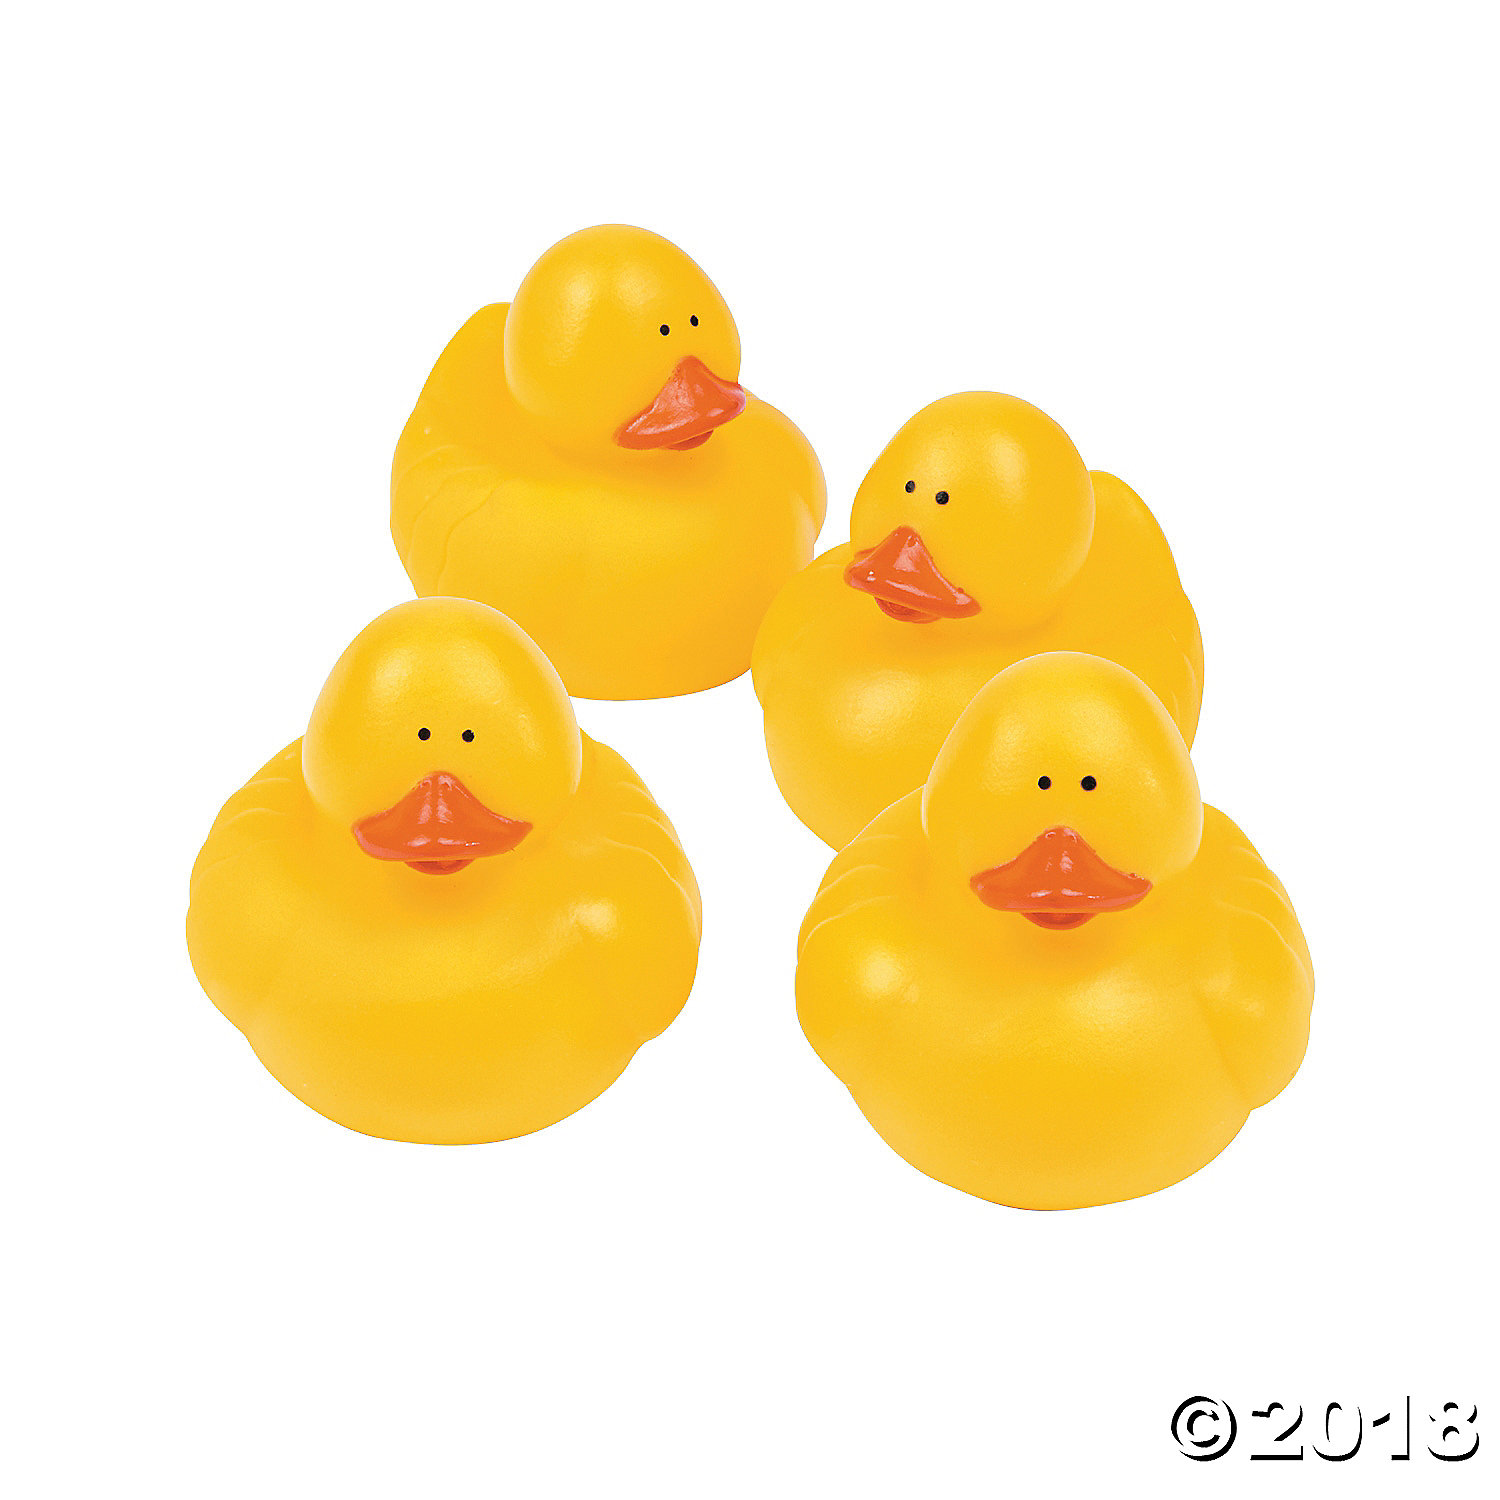 Yellow Rubber Duckies